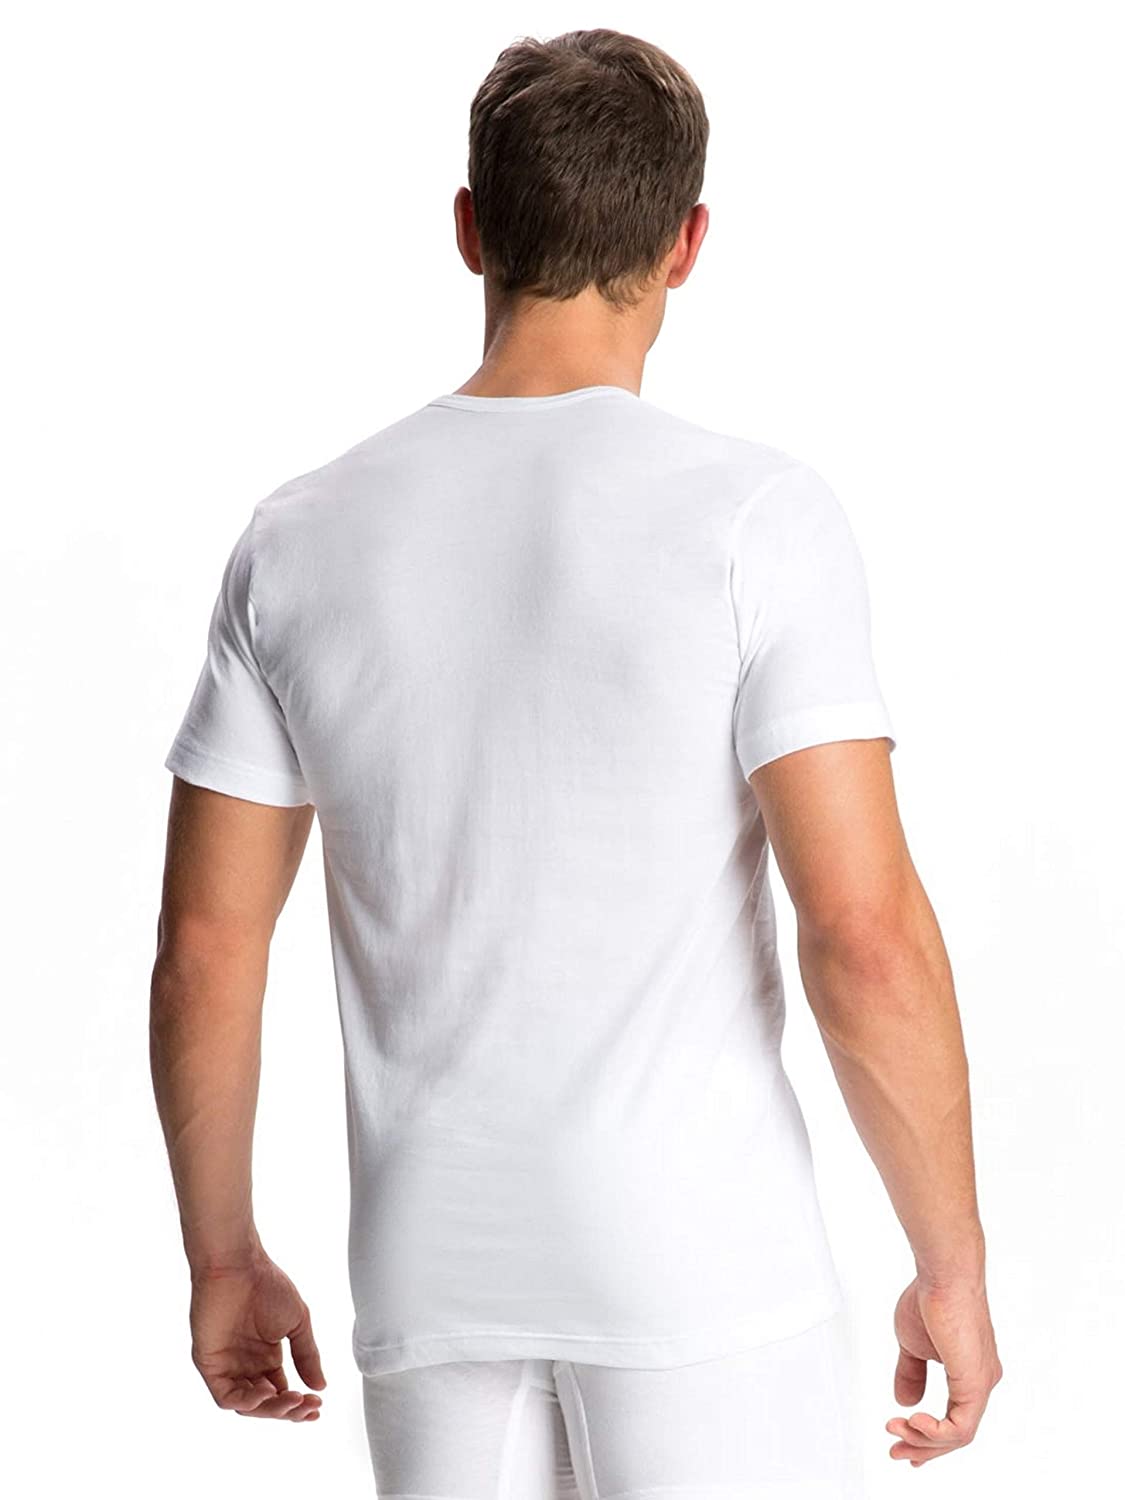 Jockey Men's Cotton Undershirt Half Sleeves (Elance)